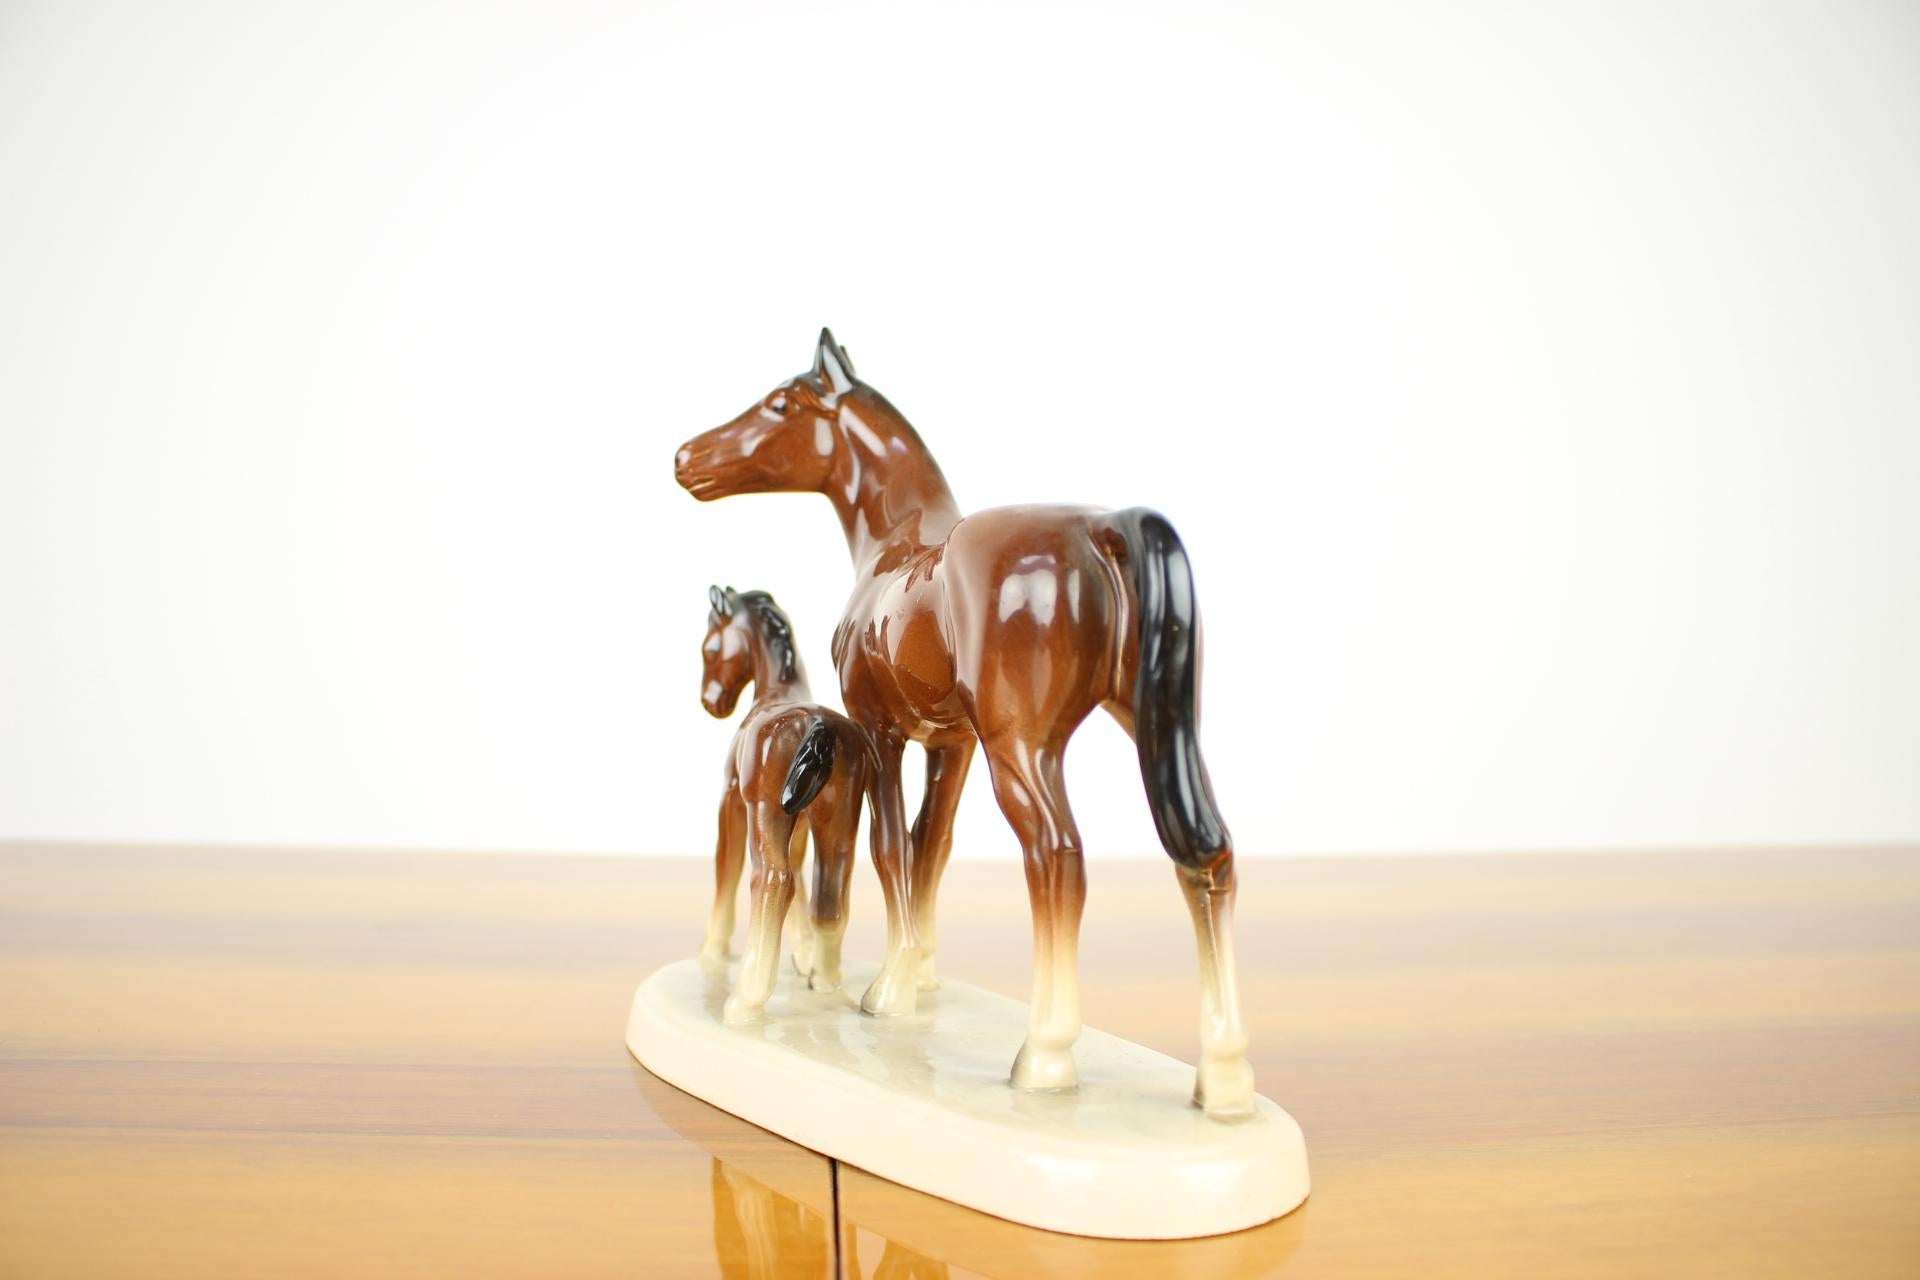 Czech Mid-Century Sculpture of Horses, 1960s For Sale